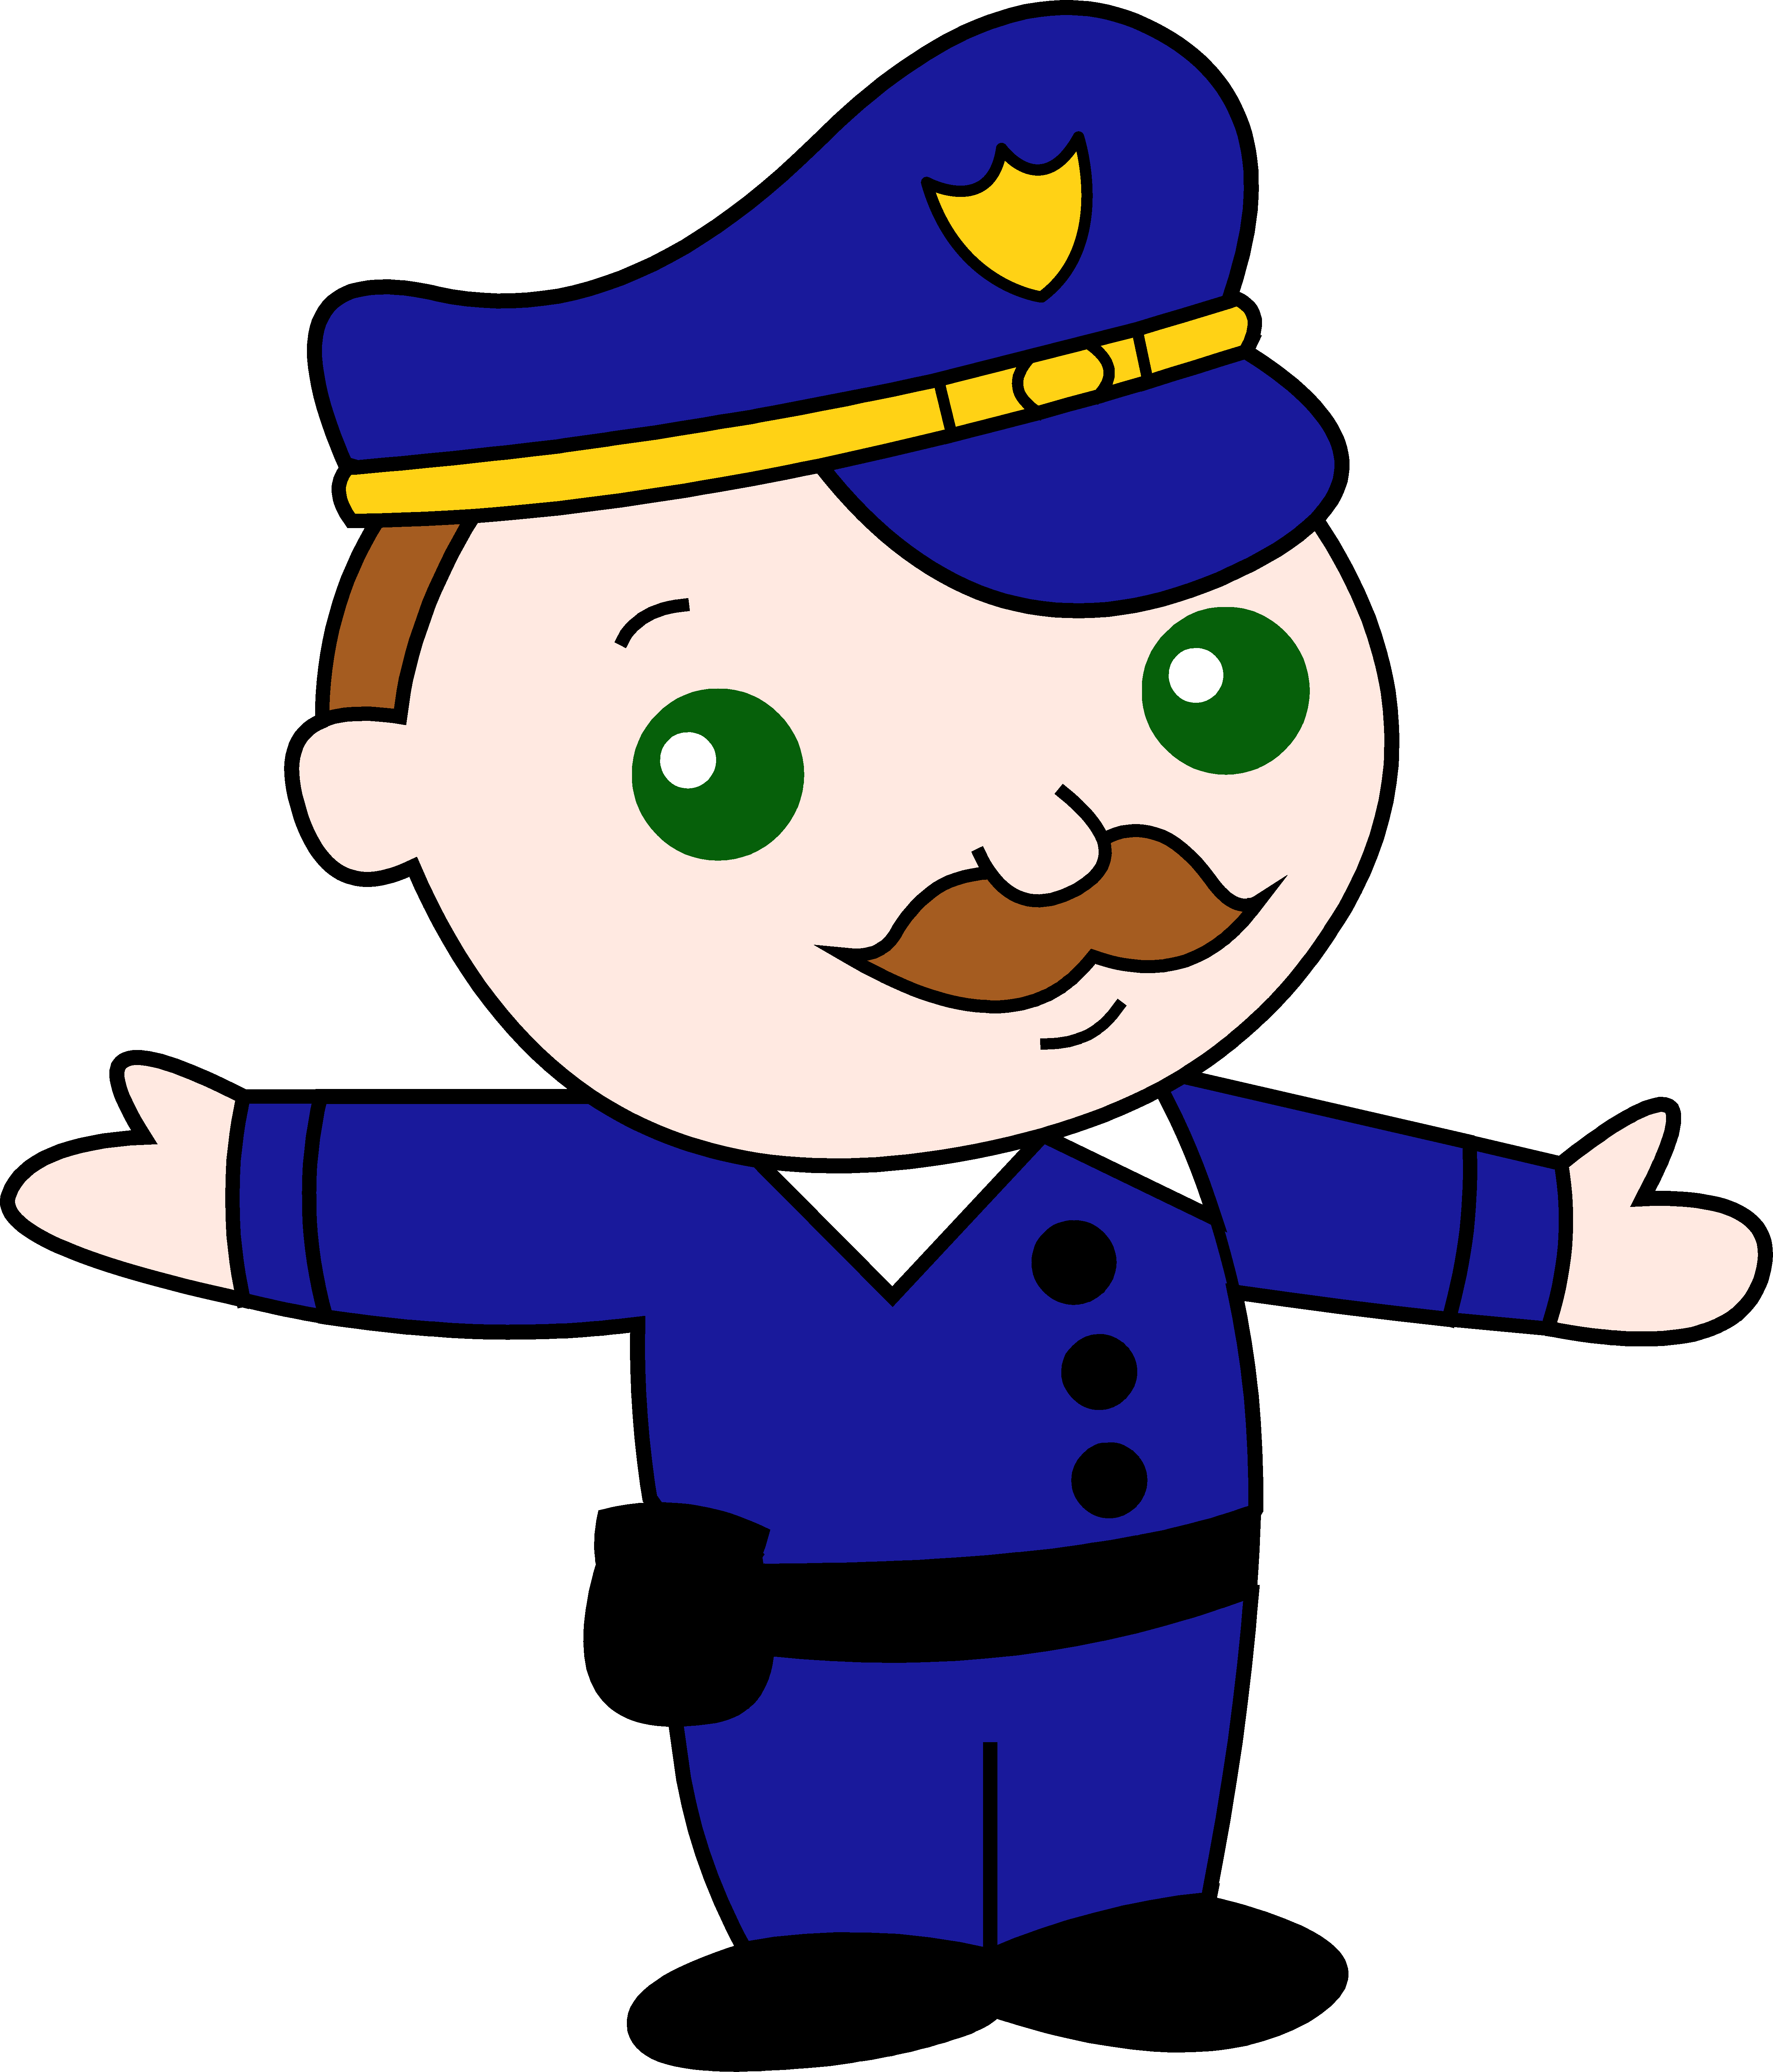 Boy Police Officer